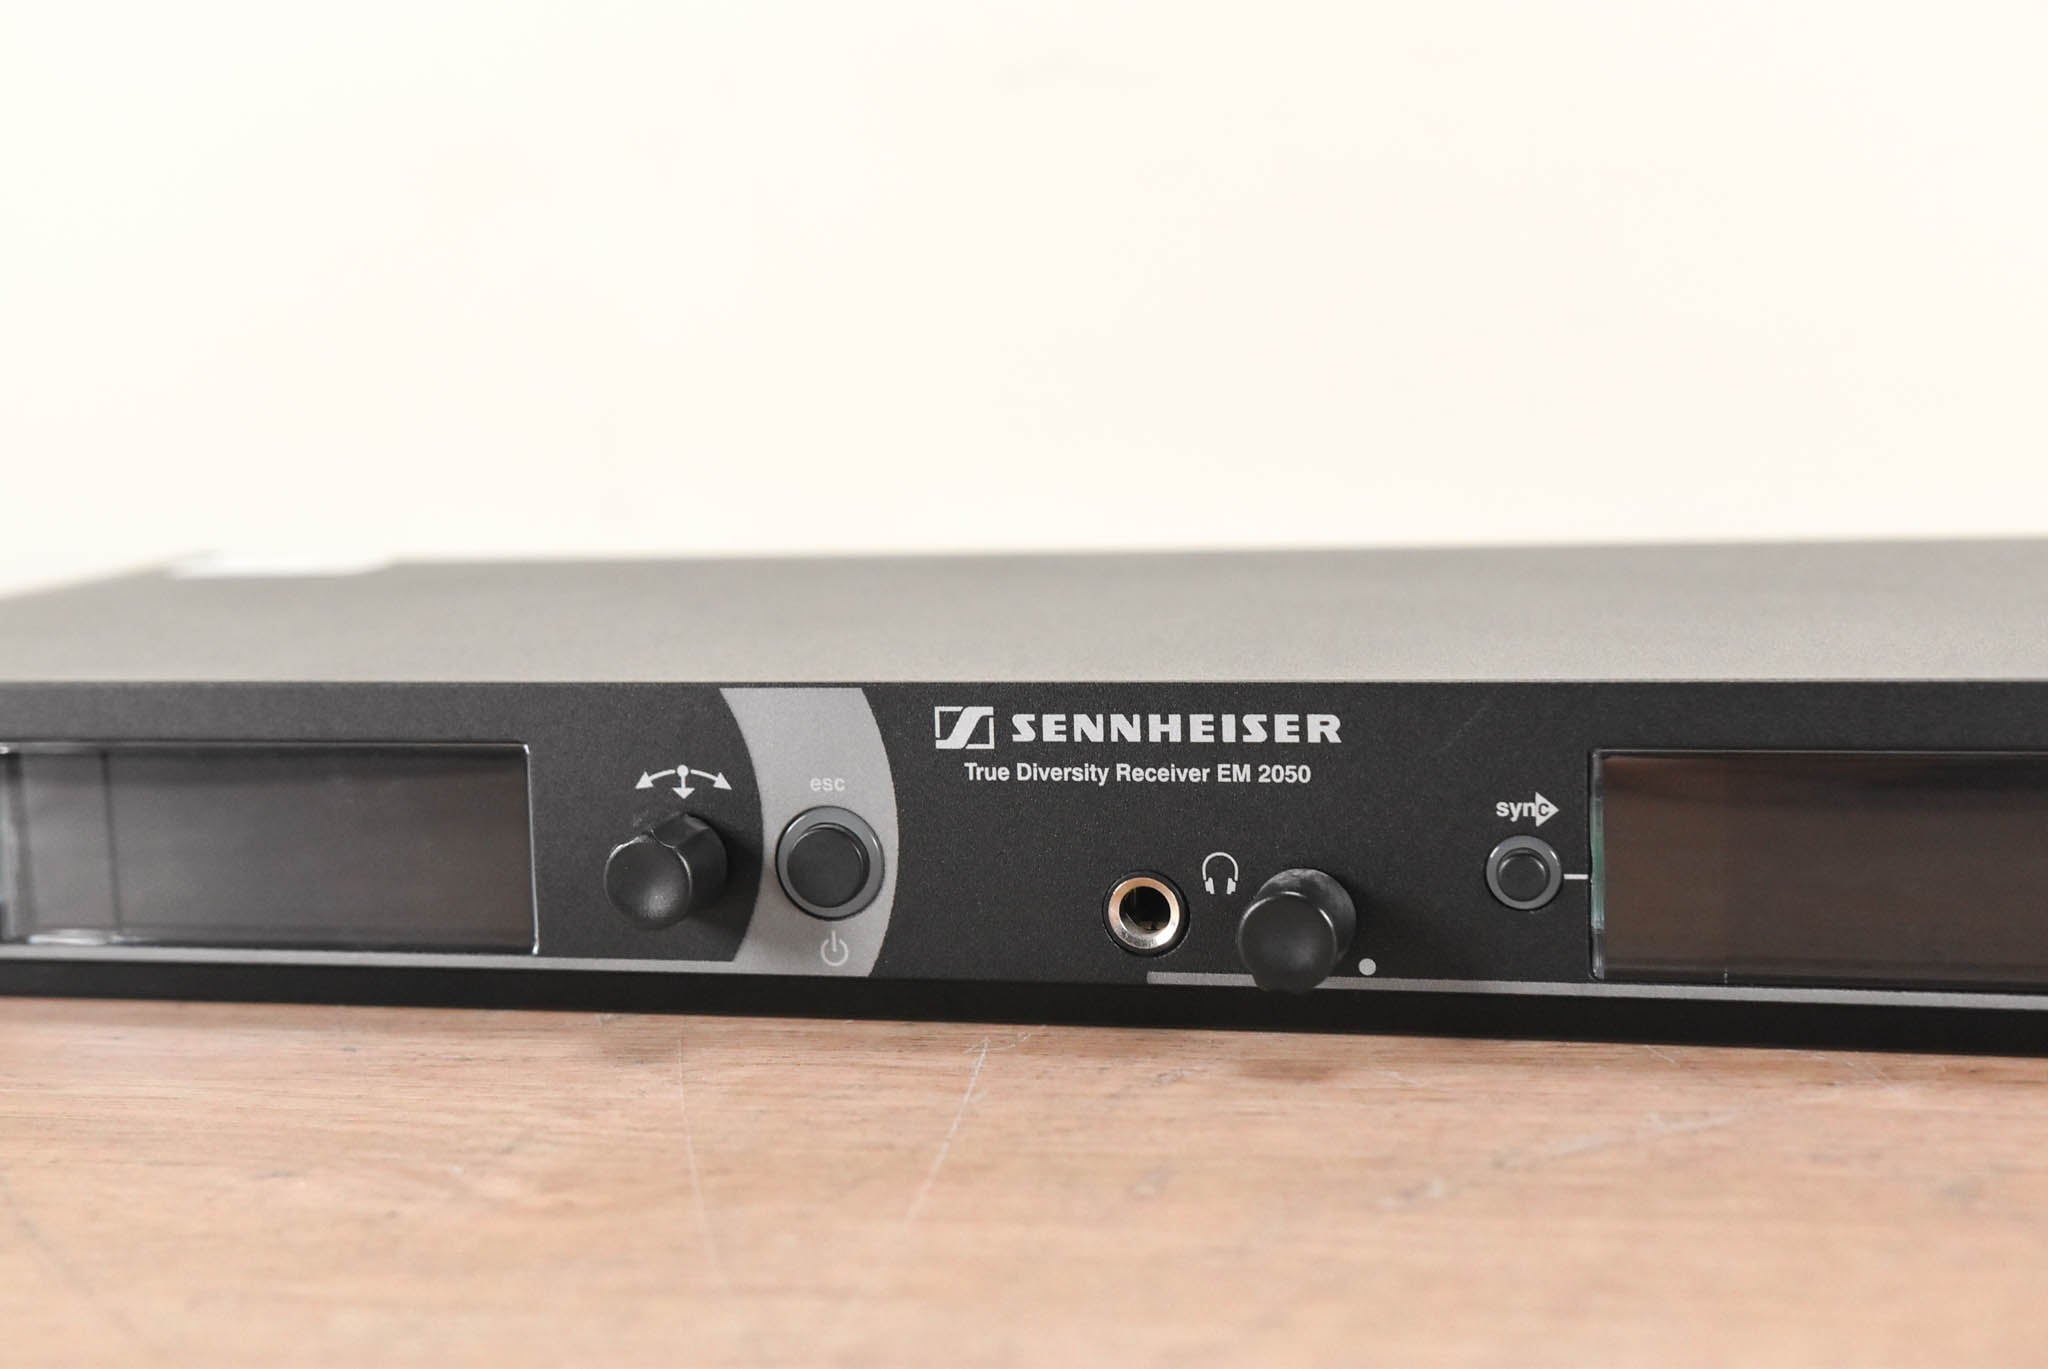 Sennheiser EM 2050 Dual Wireless Receiver - 516-558 MHz